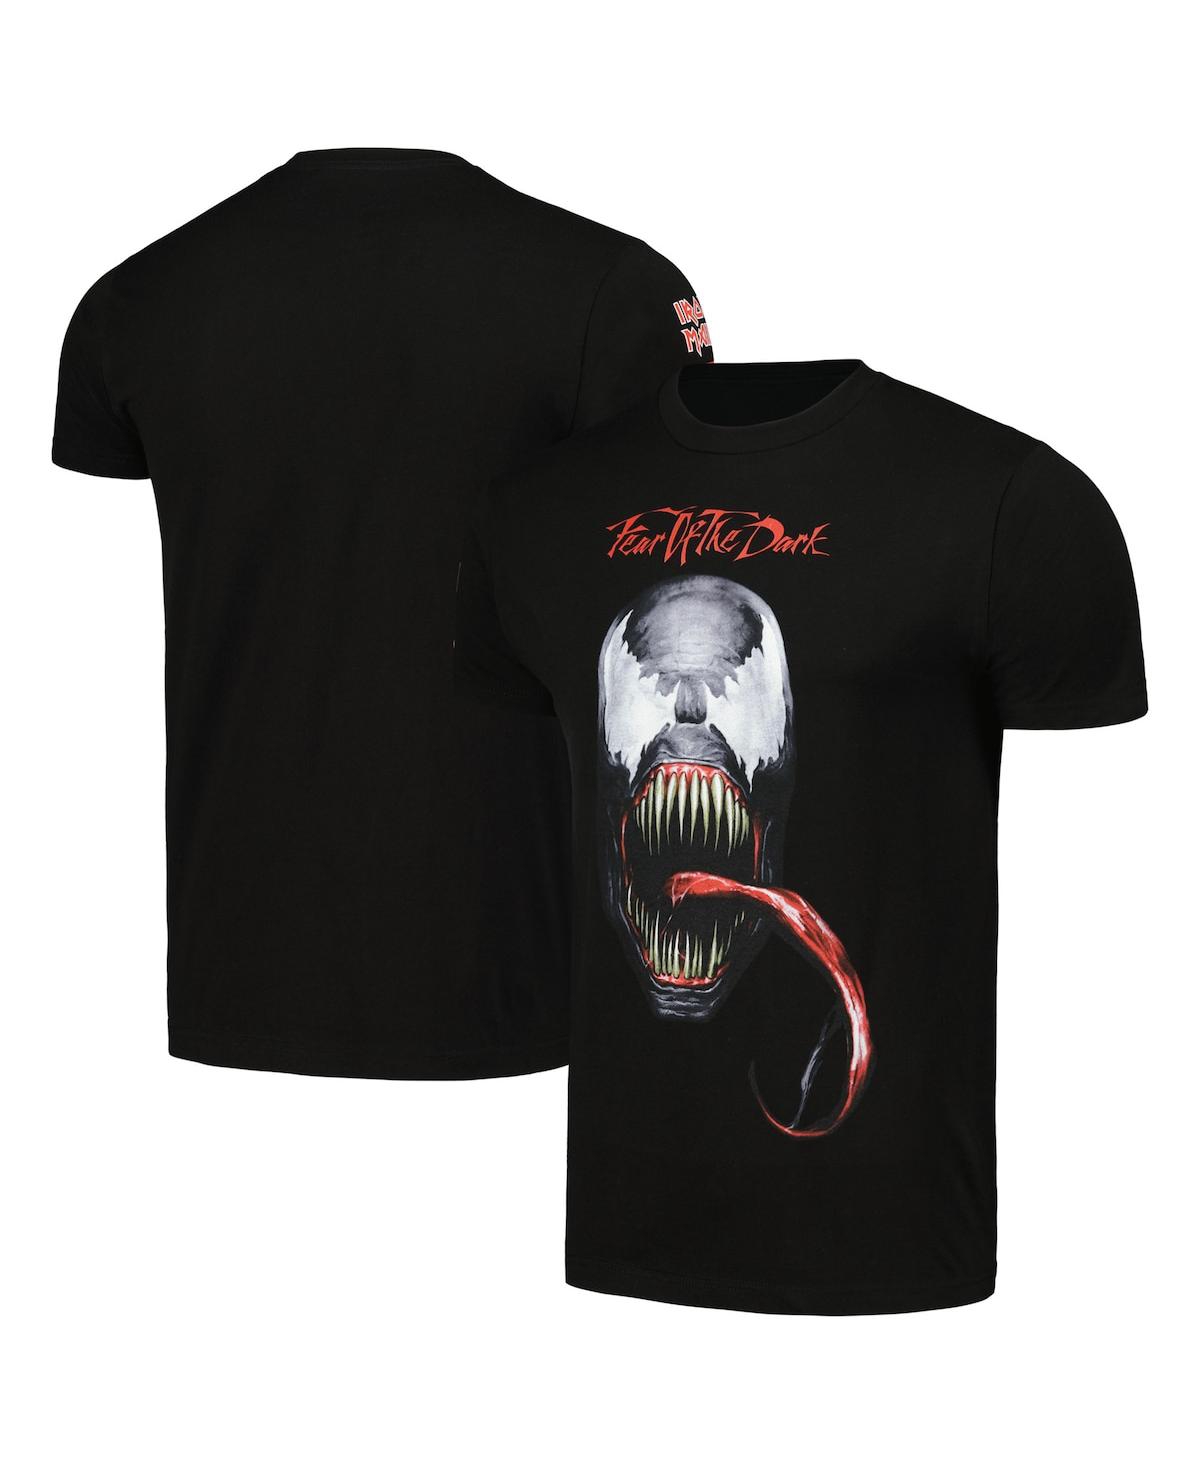 Men's Black Venom x Iron Maiden T-shirt - Black